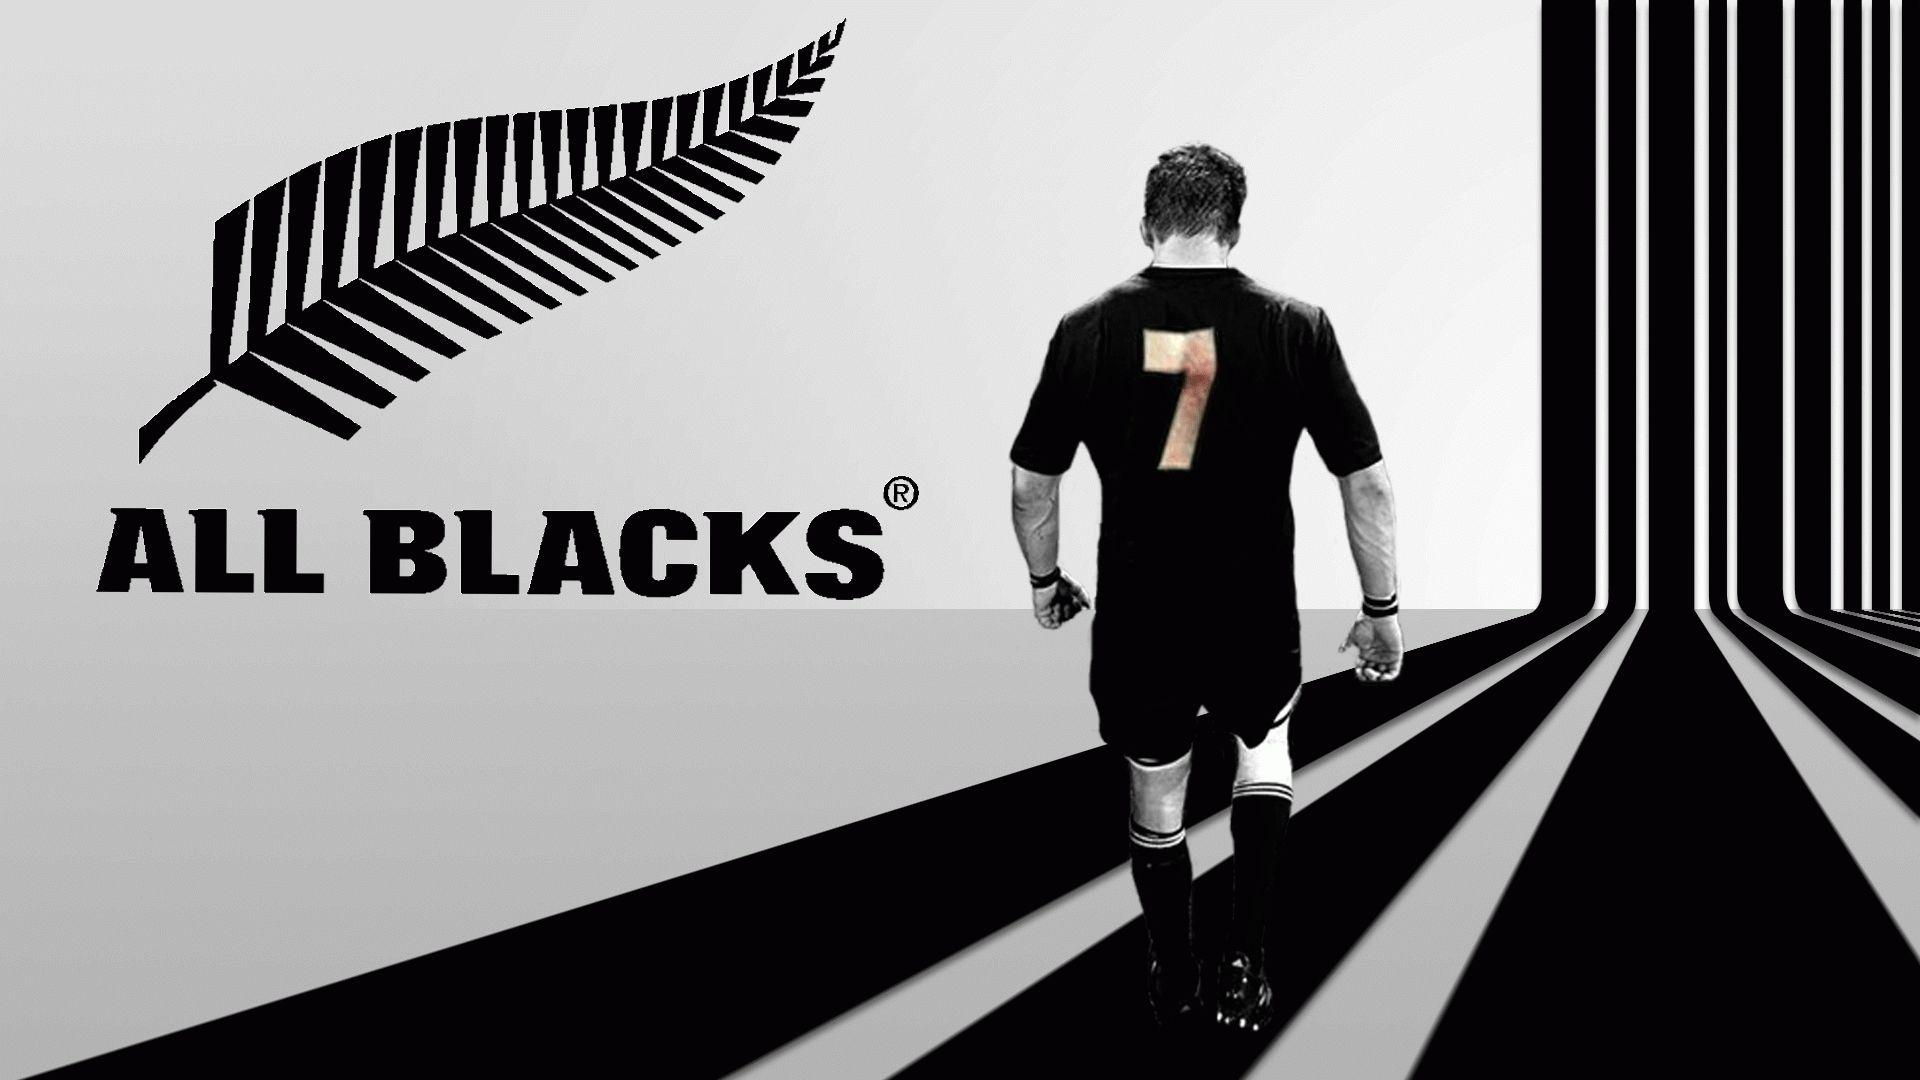 All Blacks HD Wallpaper High Quality All Blacks Wallpaper 2016